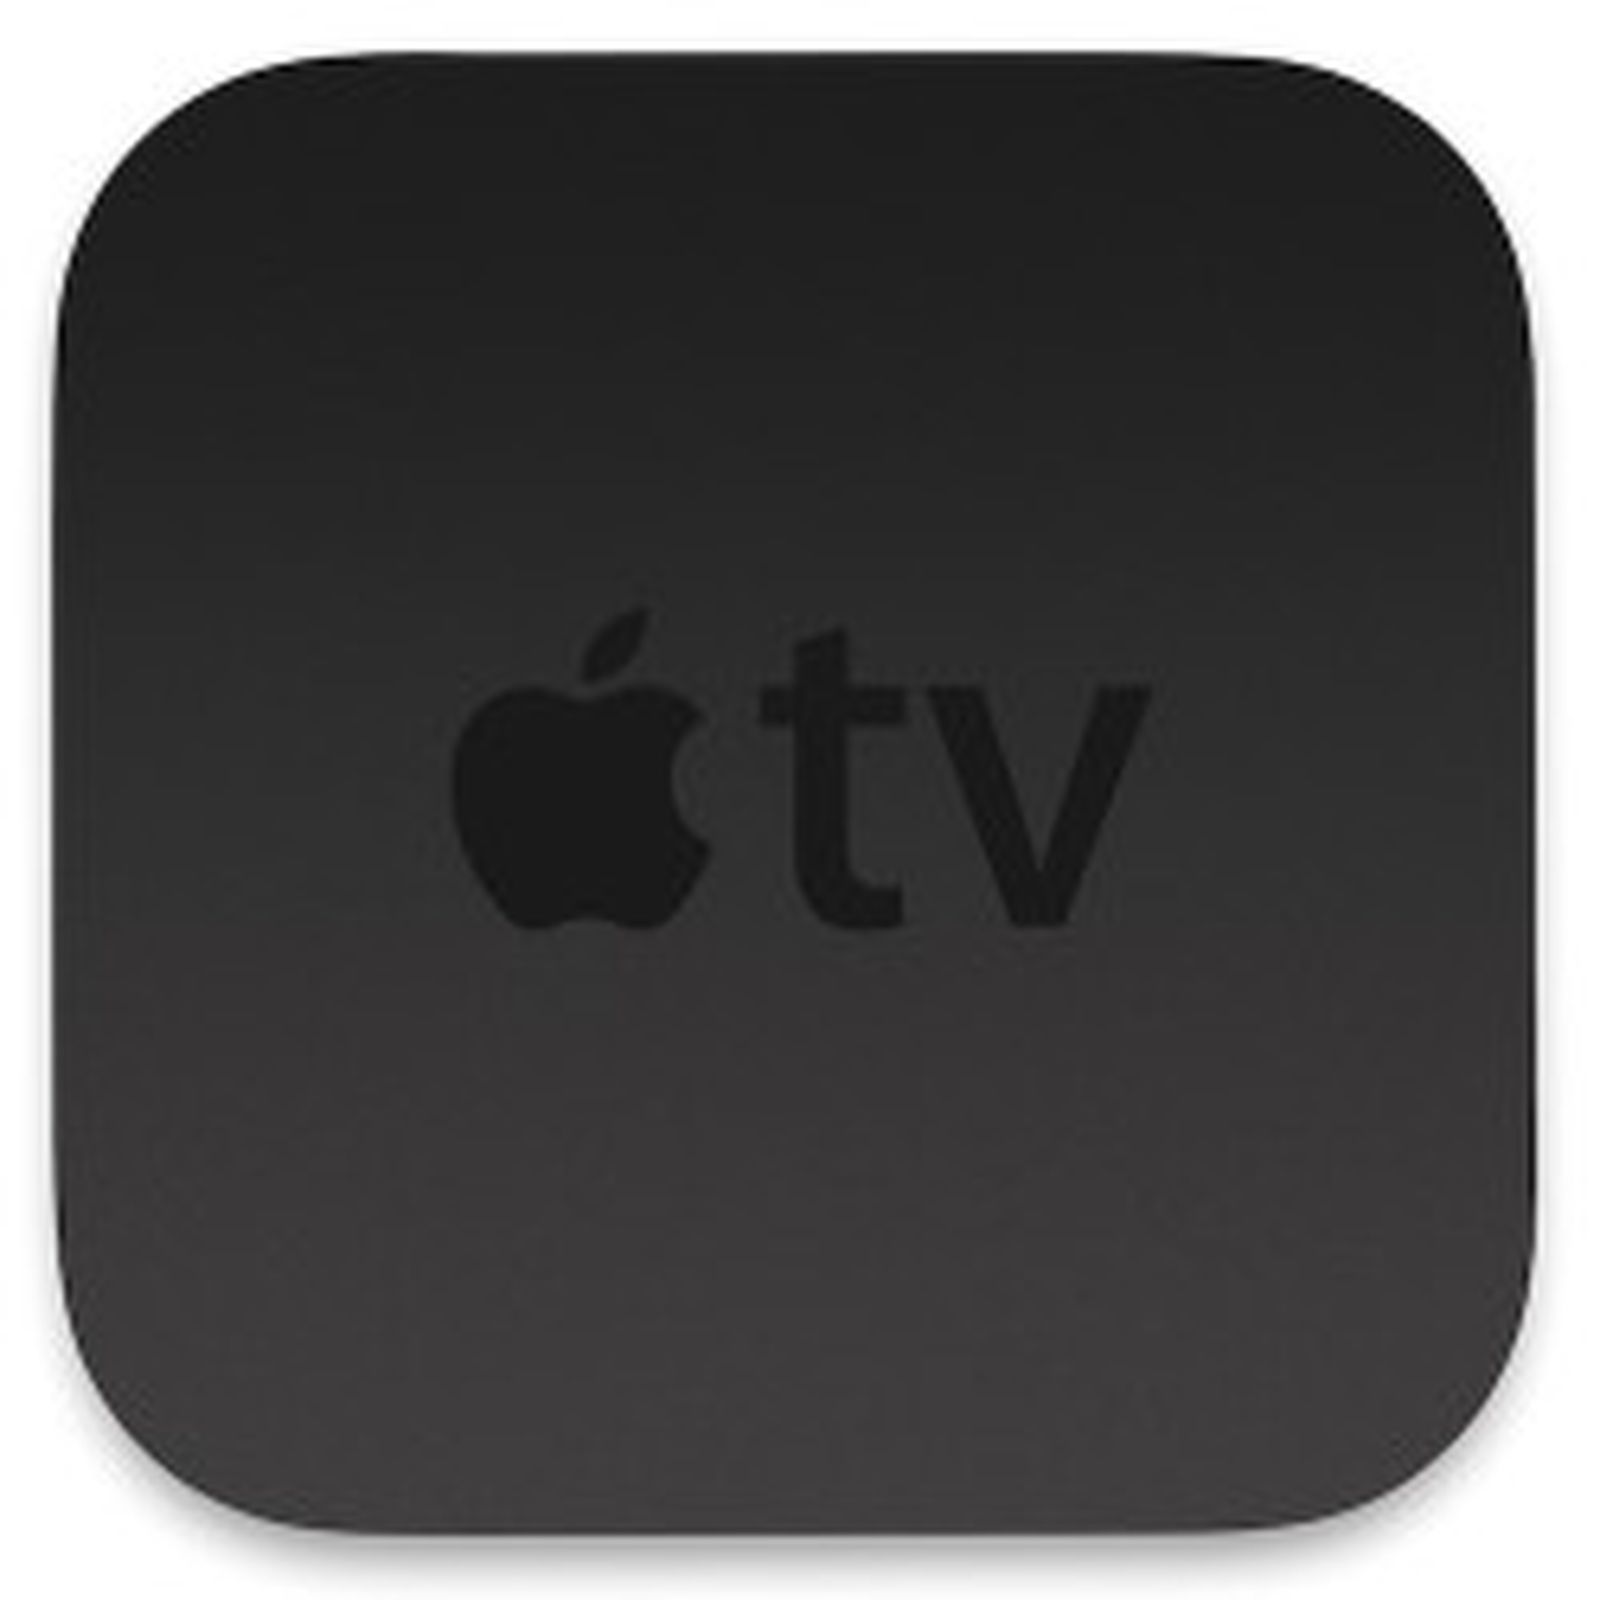 How Up an Apple TV as a Home Hub for HomeKit - MacRumors